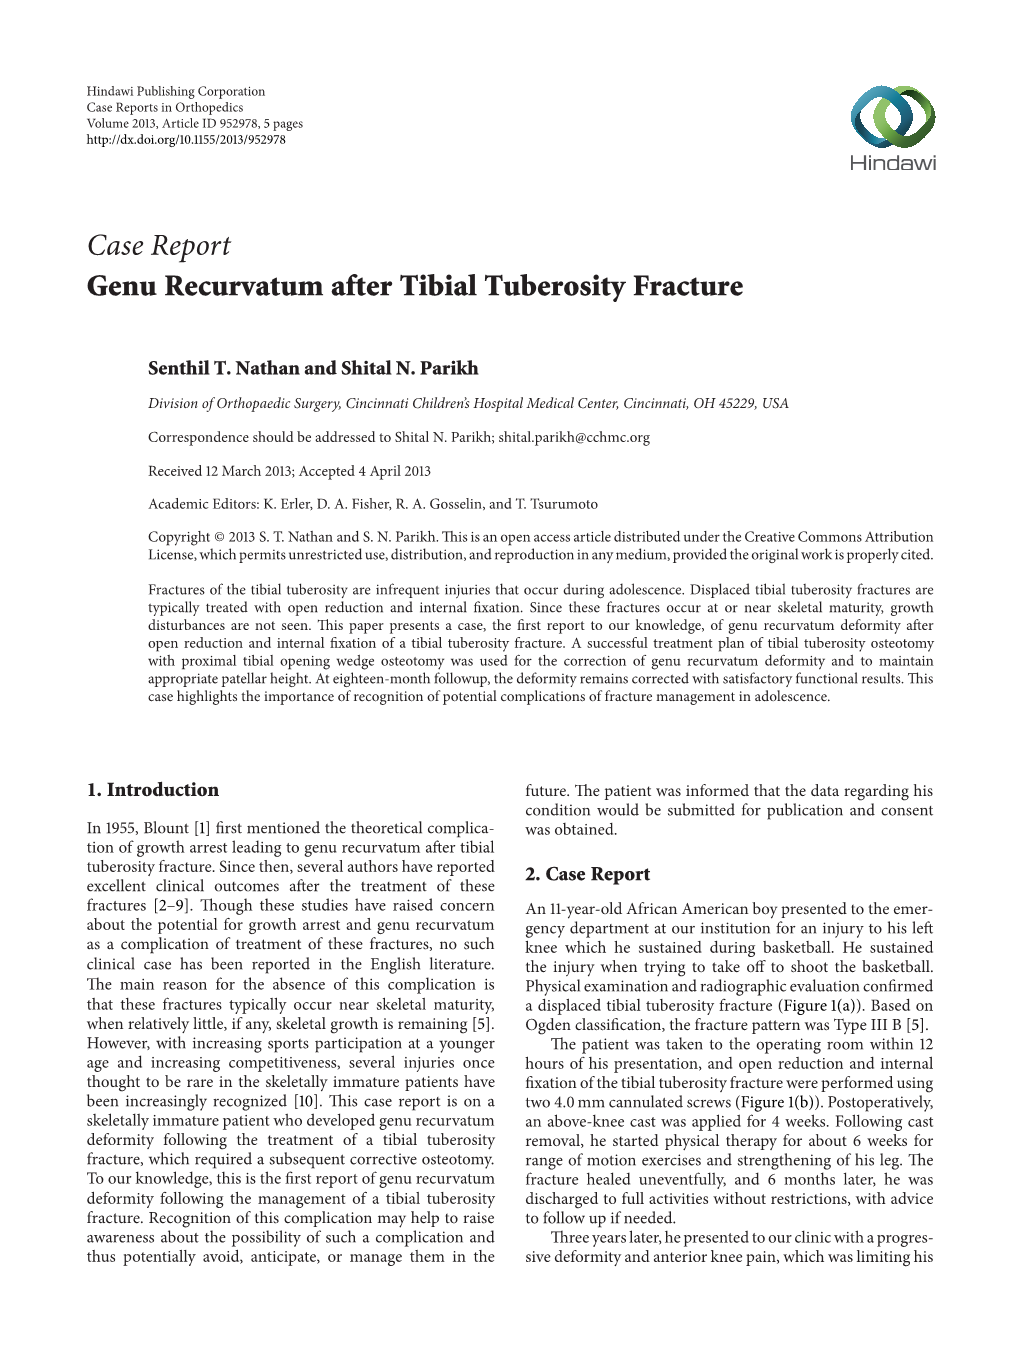 Case Report Genu Recurvatum After Tibial Tuberosity Fracture